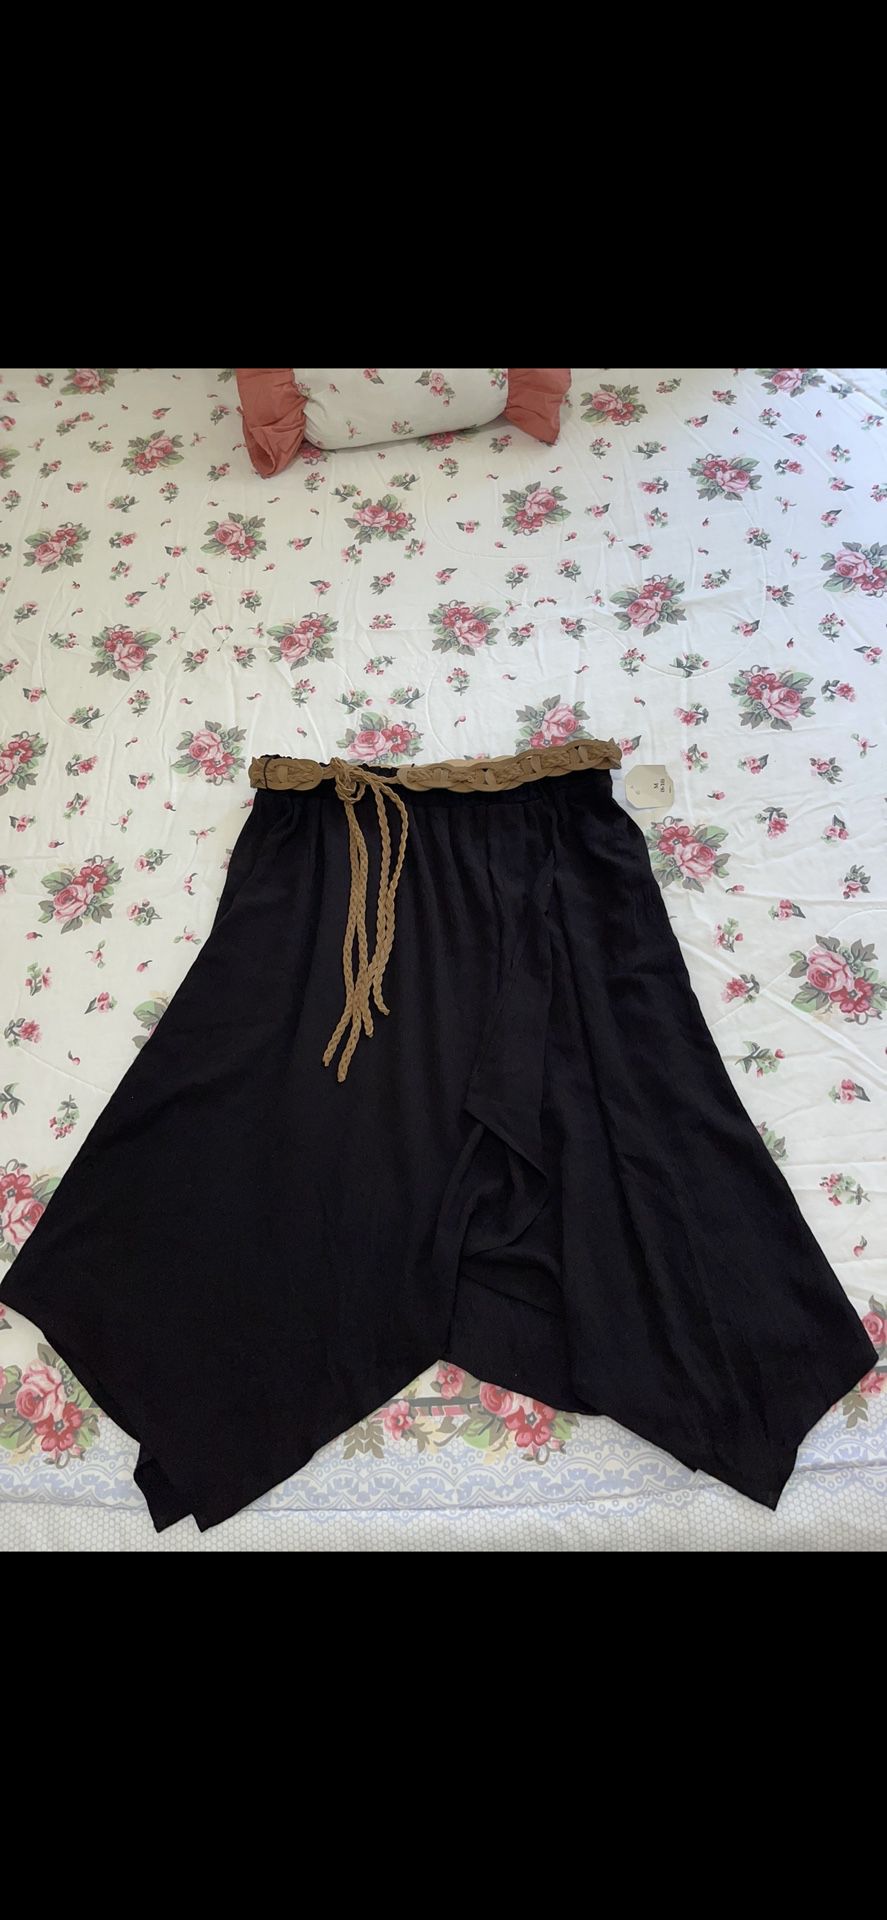 Faded Glory asymmetric skirt, elastic waist, with belt, new with tags.size medium. 